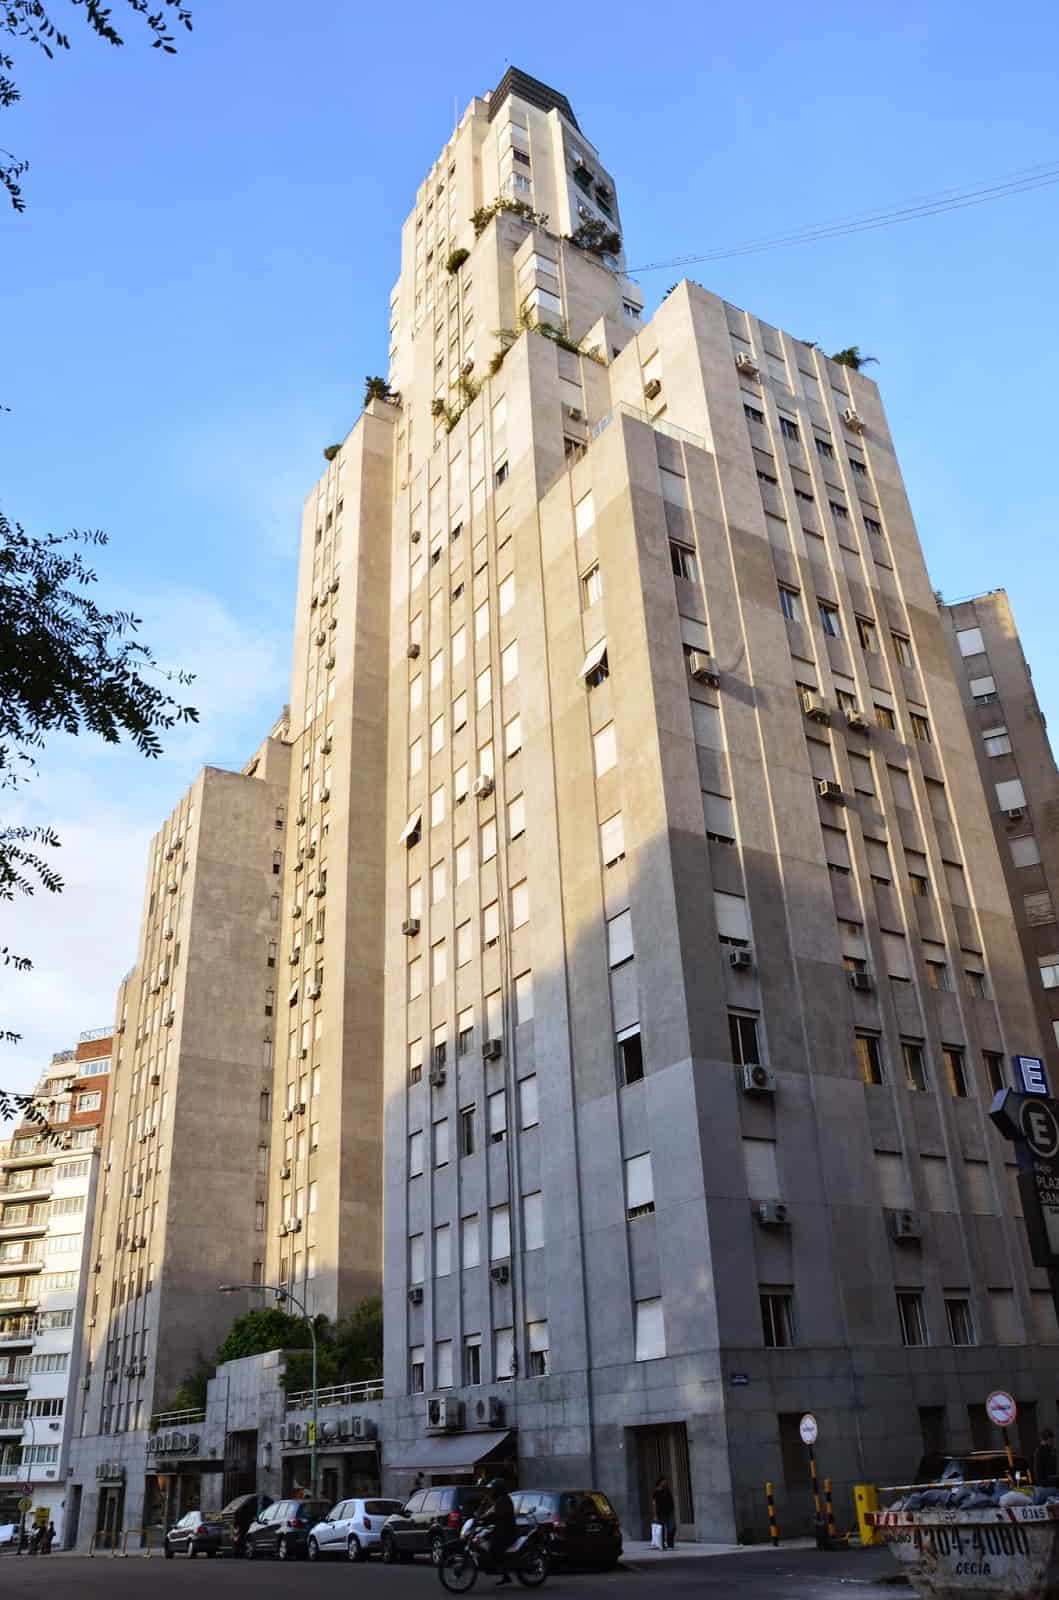 Edificio Kavanagh in Retiro, Buenos Aires, Argentina